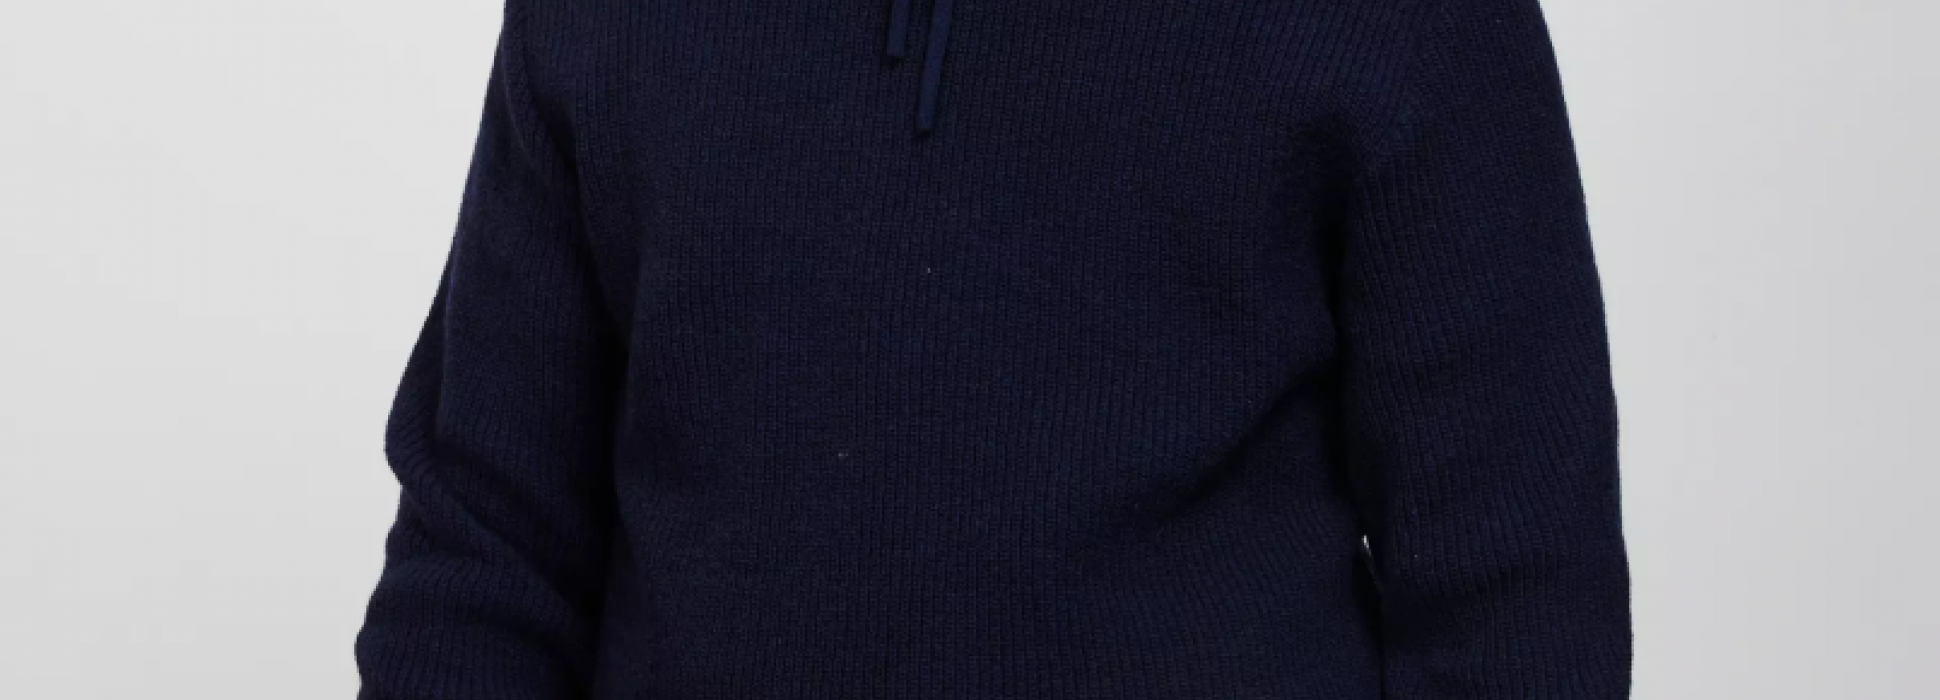 Le Minor tricote son pull iconique en fibres recyclées